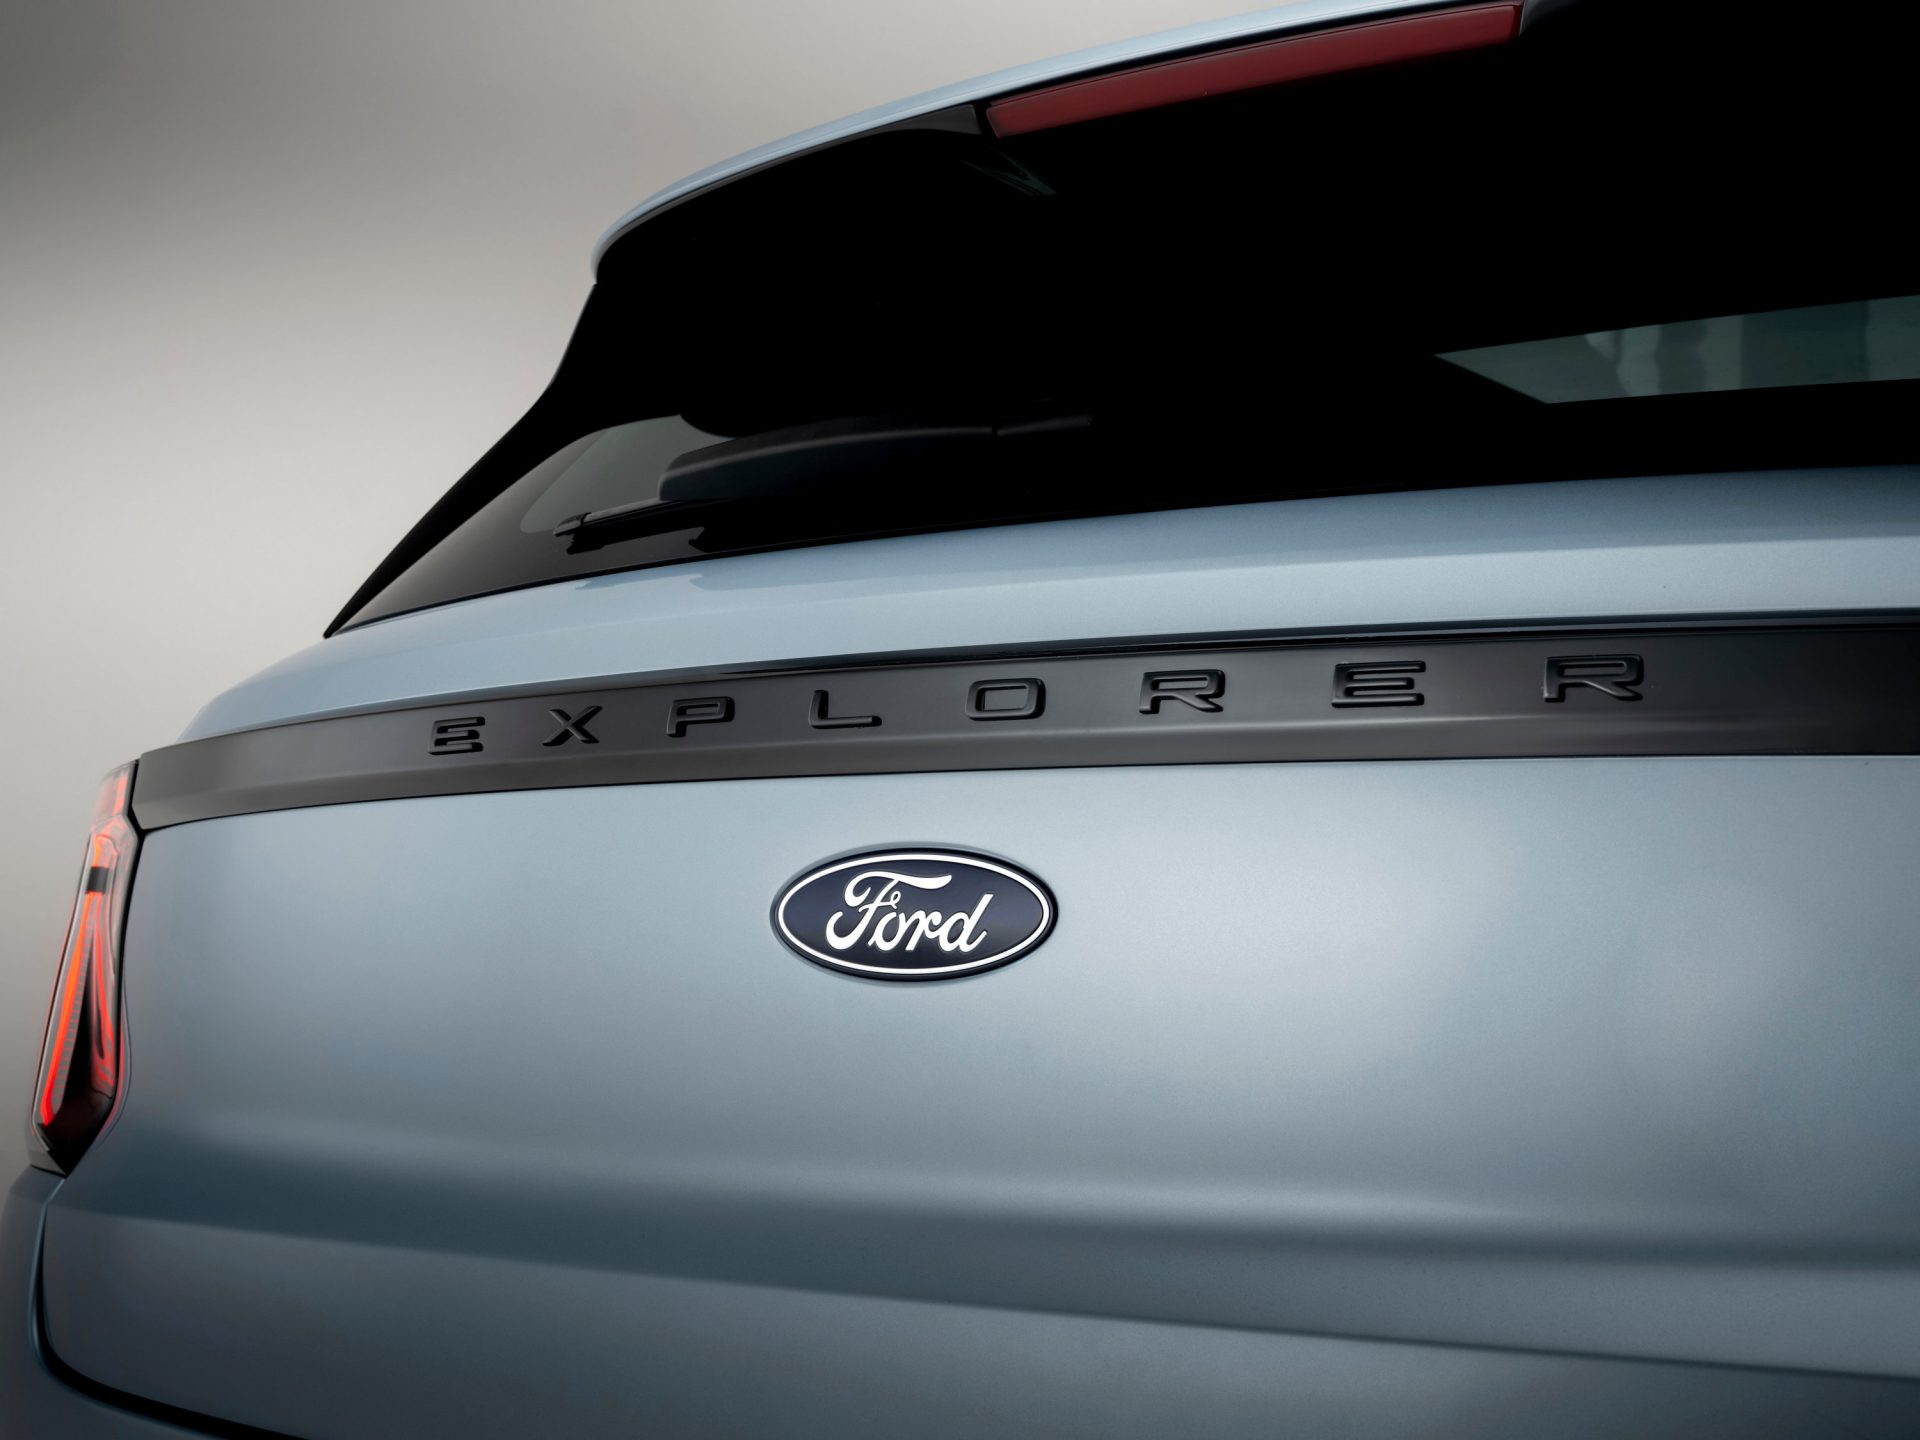 2023 FORD TheNewAll Η σχεδίαση του νέου ηλεκτρικού Ford Explorer, αντανακλά την αμερικανική καταγωγή του